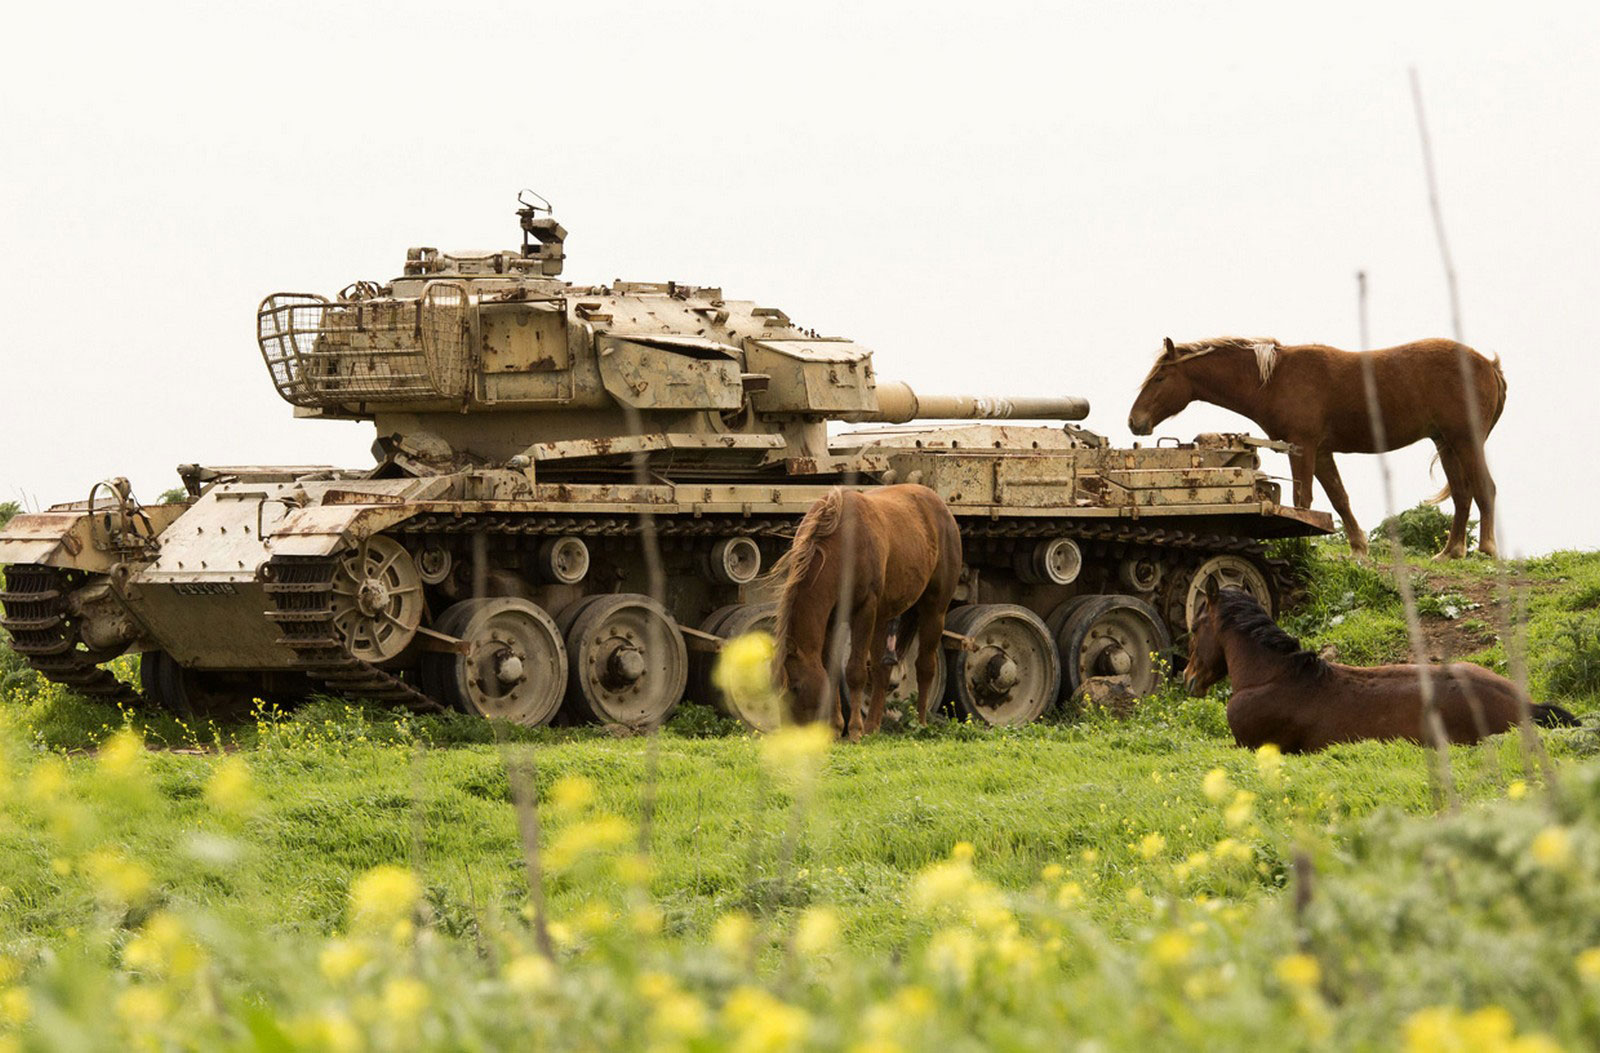 лошади пасутся возле танка, фото